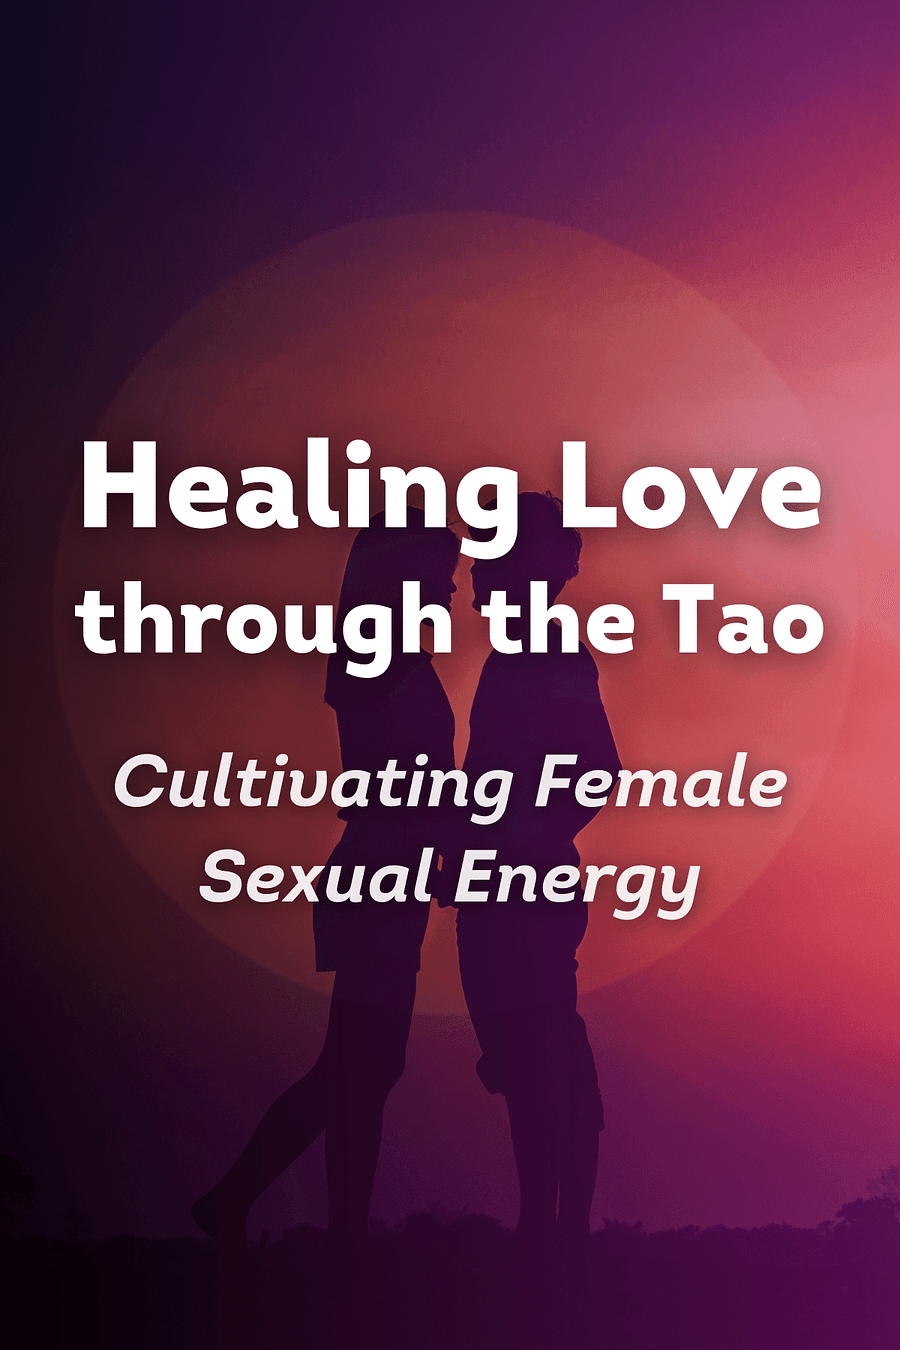 Healing Love through the Tao by Mantak Chia - Book Summary